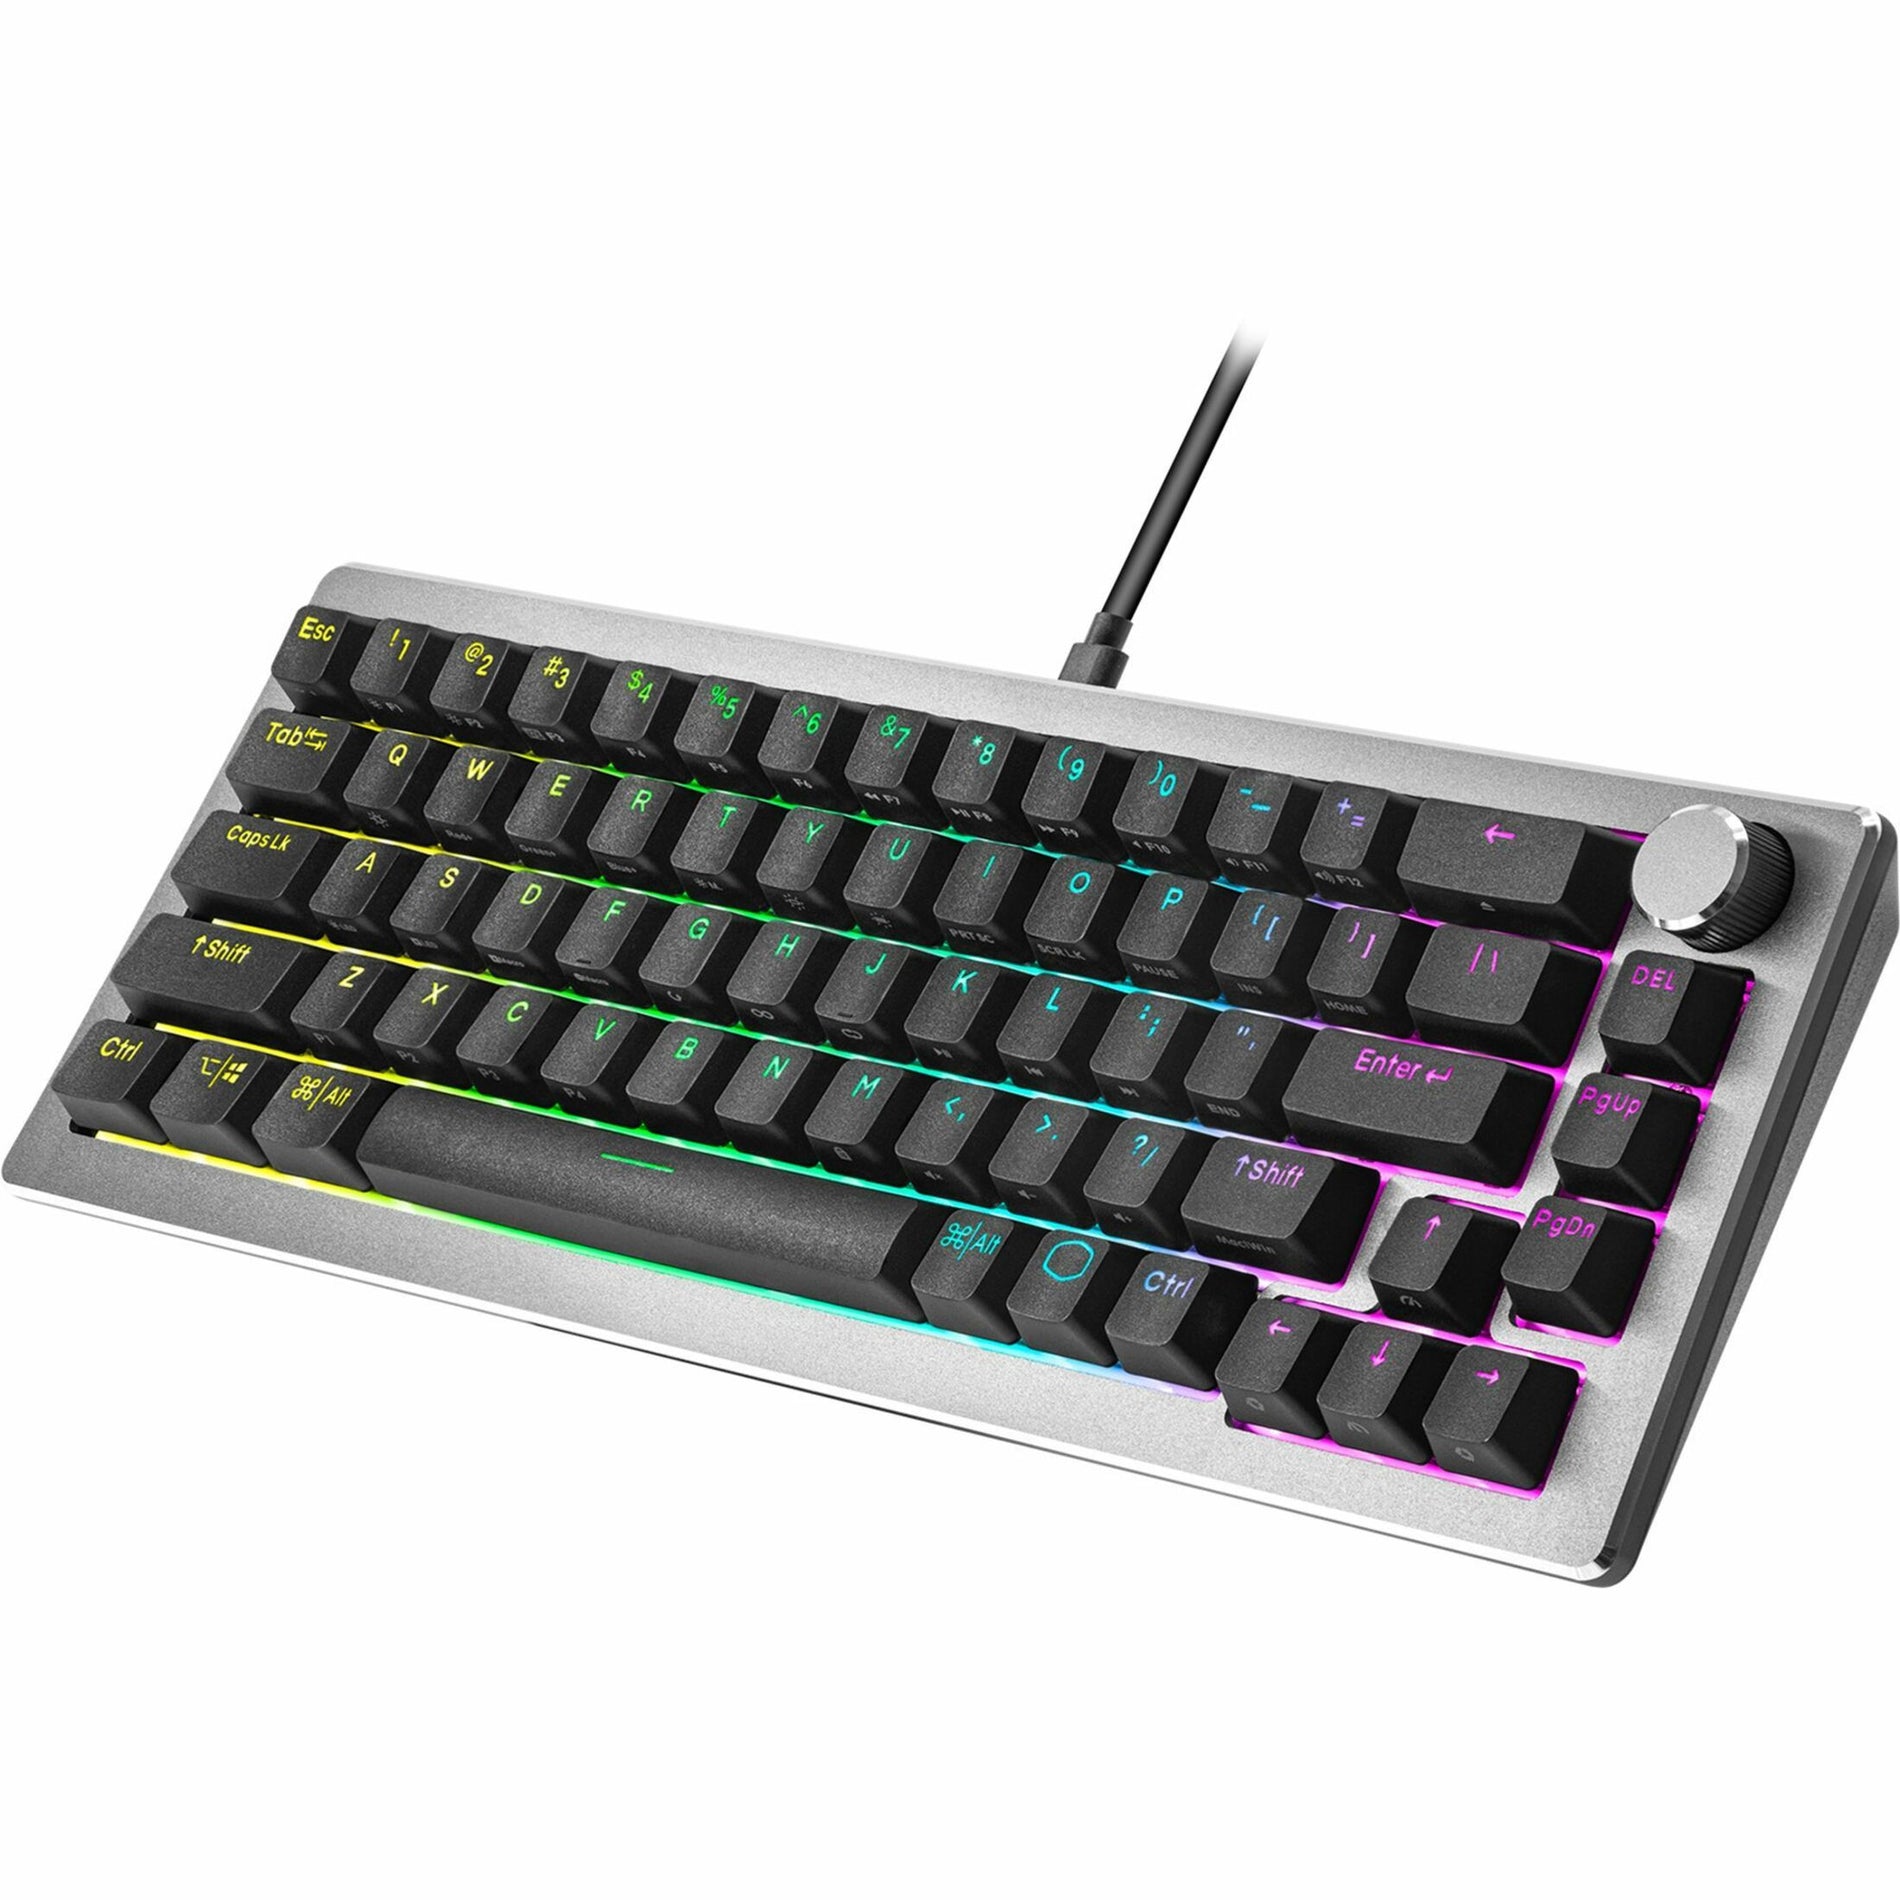 Cooler Master CK-720-GKKM1-US CK720 65% Gaming Keyboard, RGB LED Backlight, Mechanical/MX Keyswitch Technology